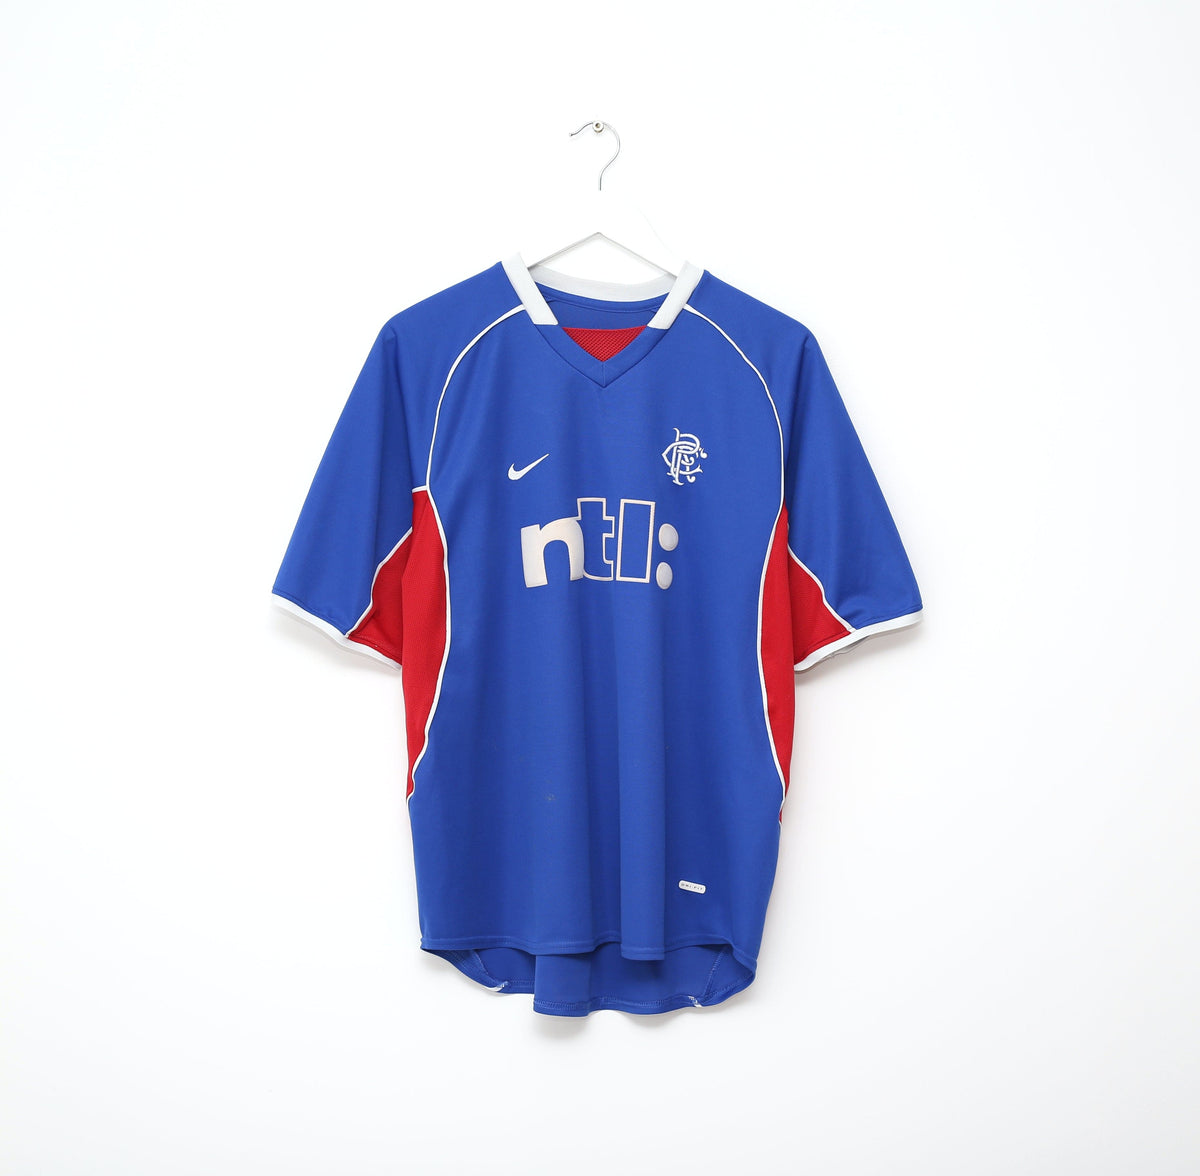 Classic Football Shirts  1994 Glasgow Rangers Vintage Old Soccer Jerseys